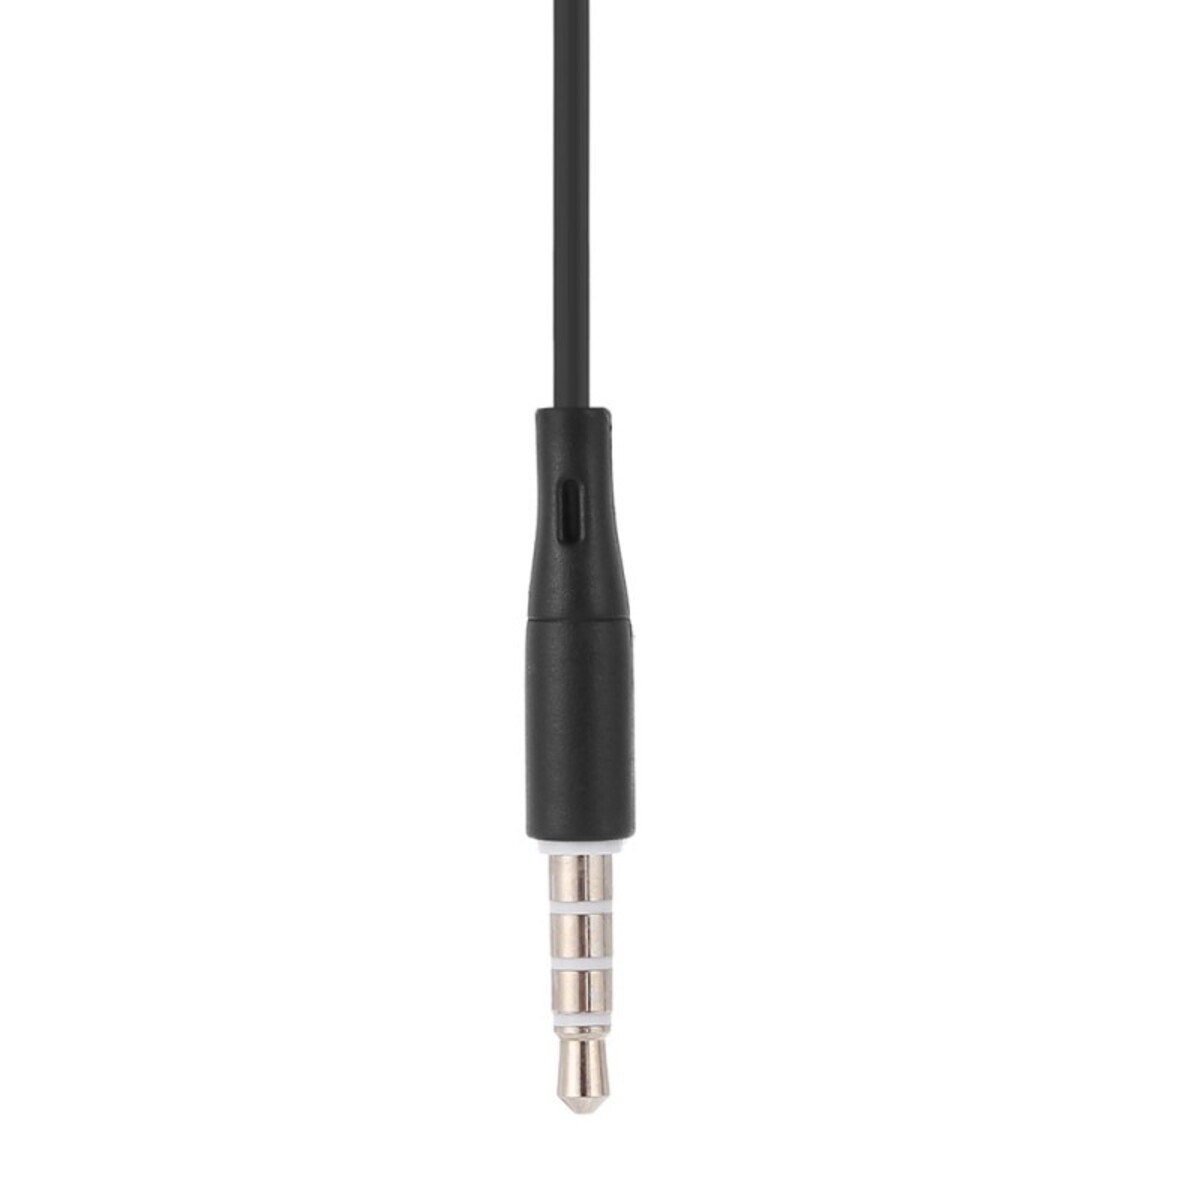 Trands Wired Mono Earbud 3.5mm Single Ear Bud HS419